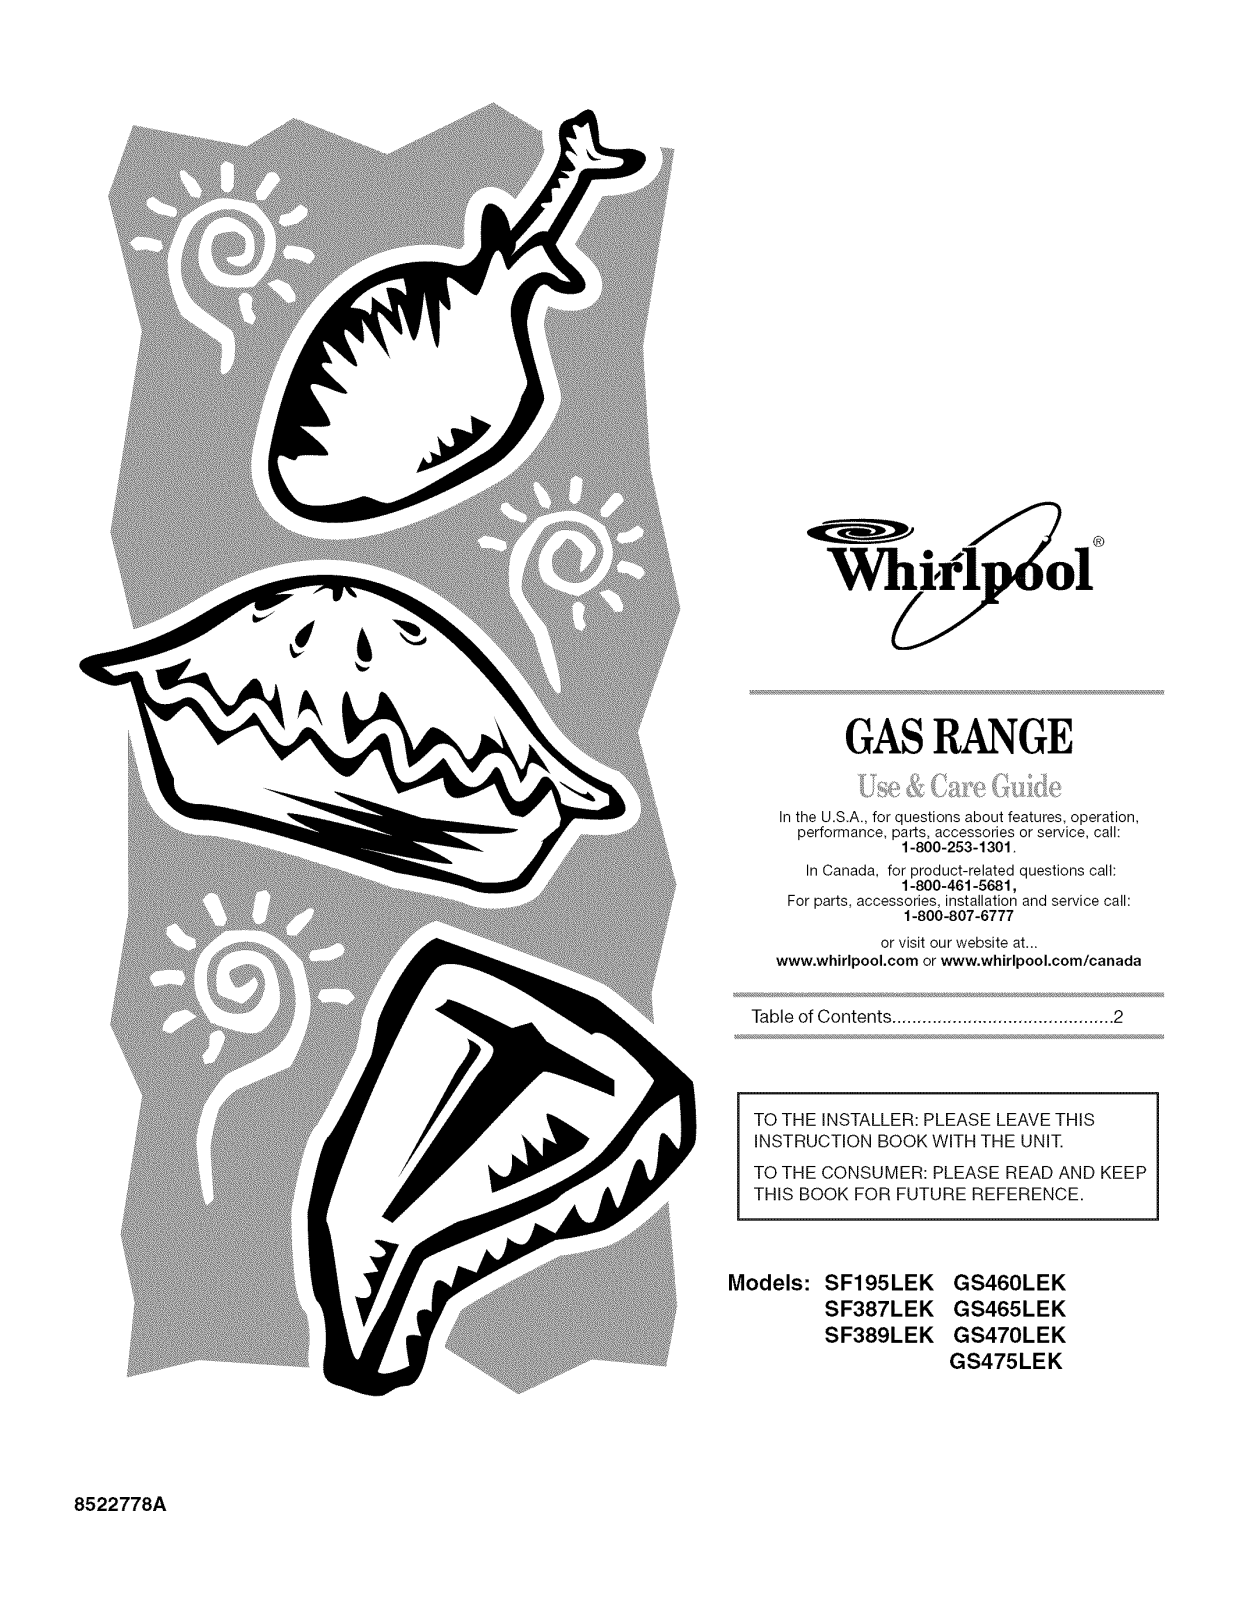 Whirlpool GS475LELS0, SF389LEKQ0, GS465LEKS1, GS465LEKS0 Owner’s Manual